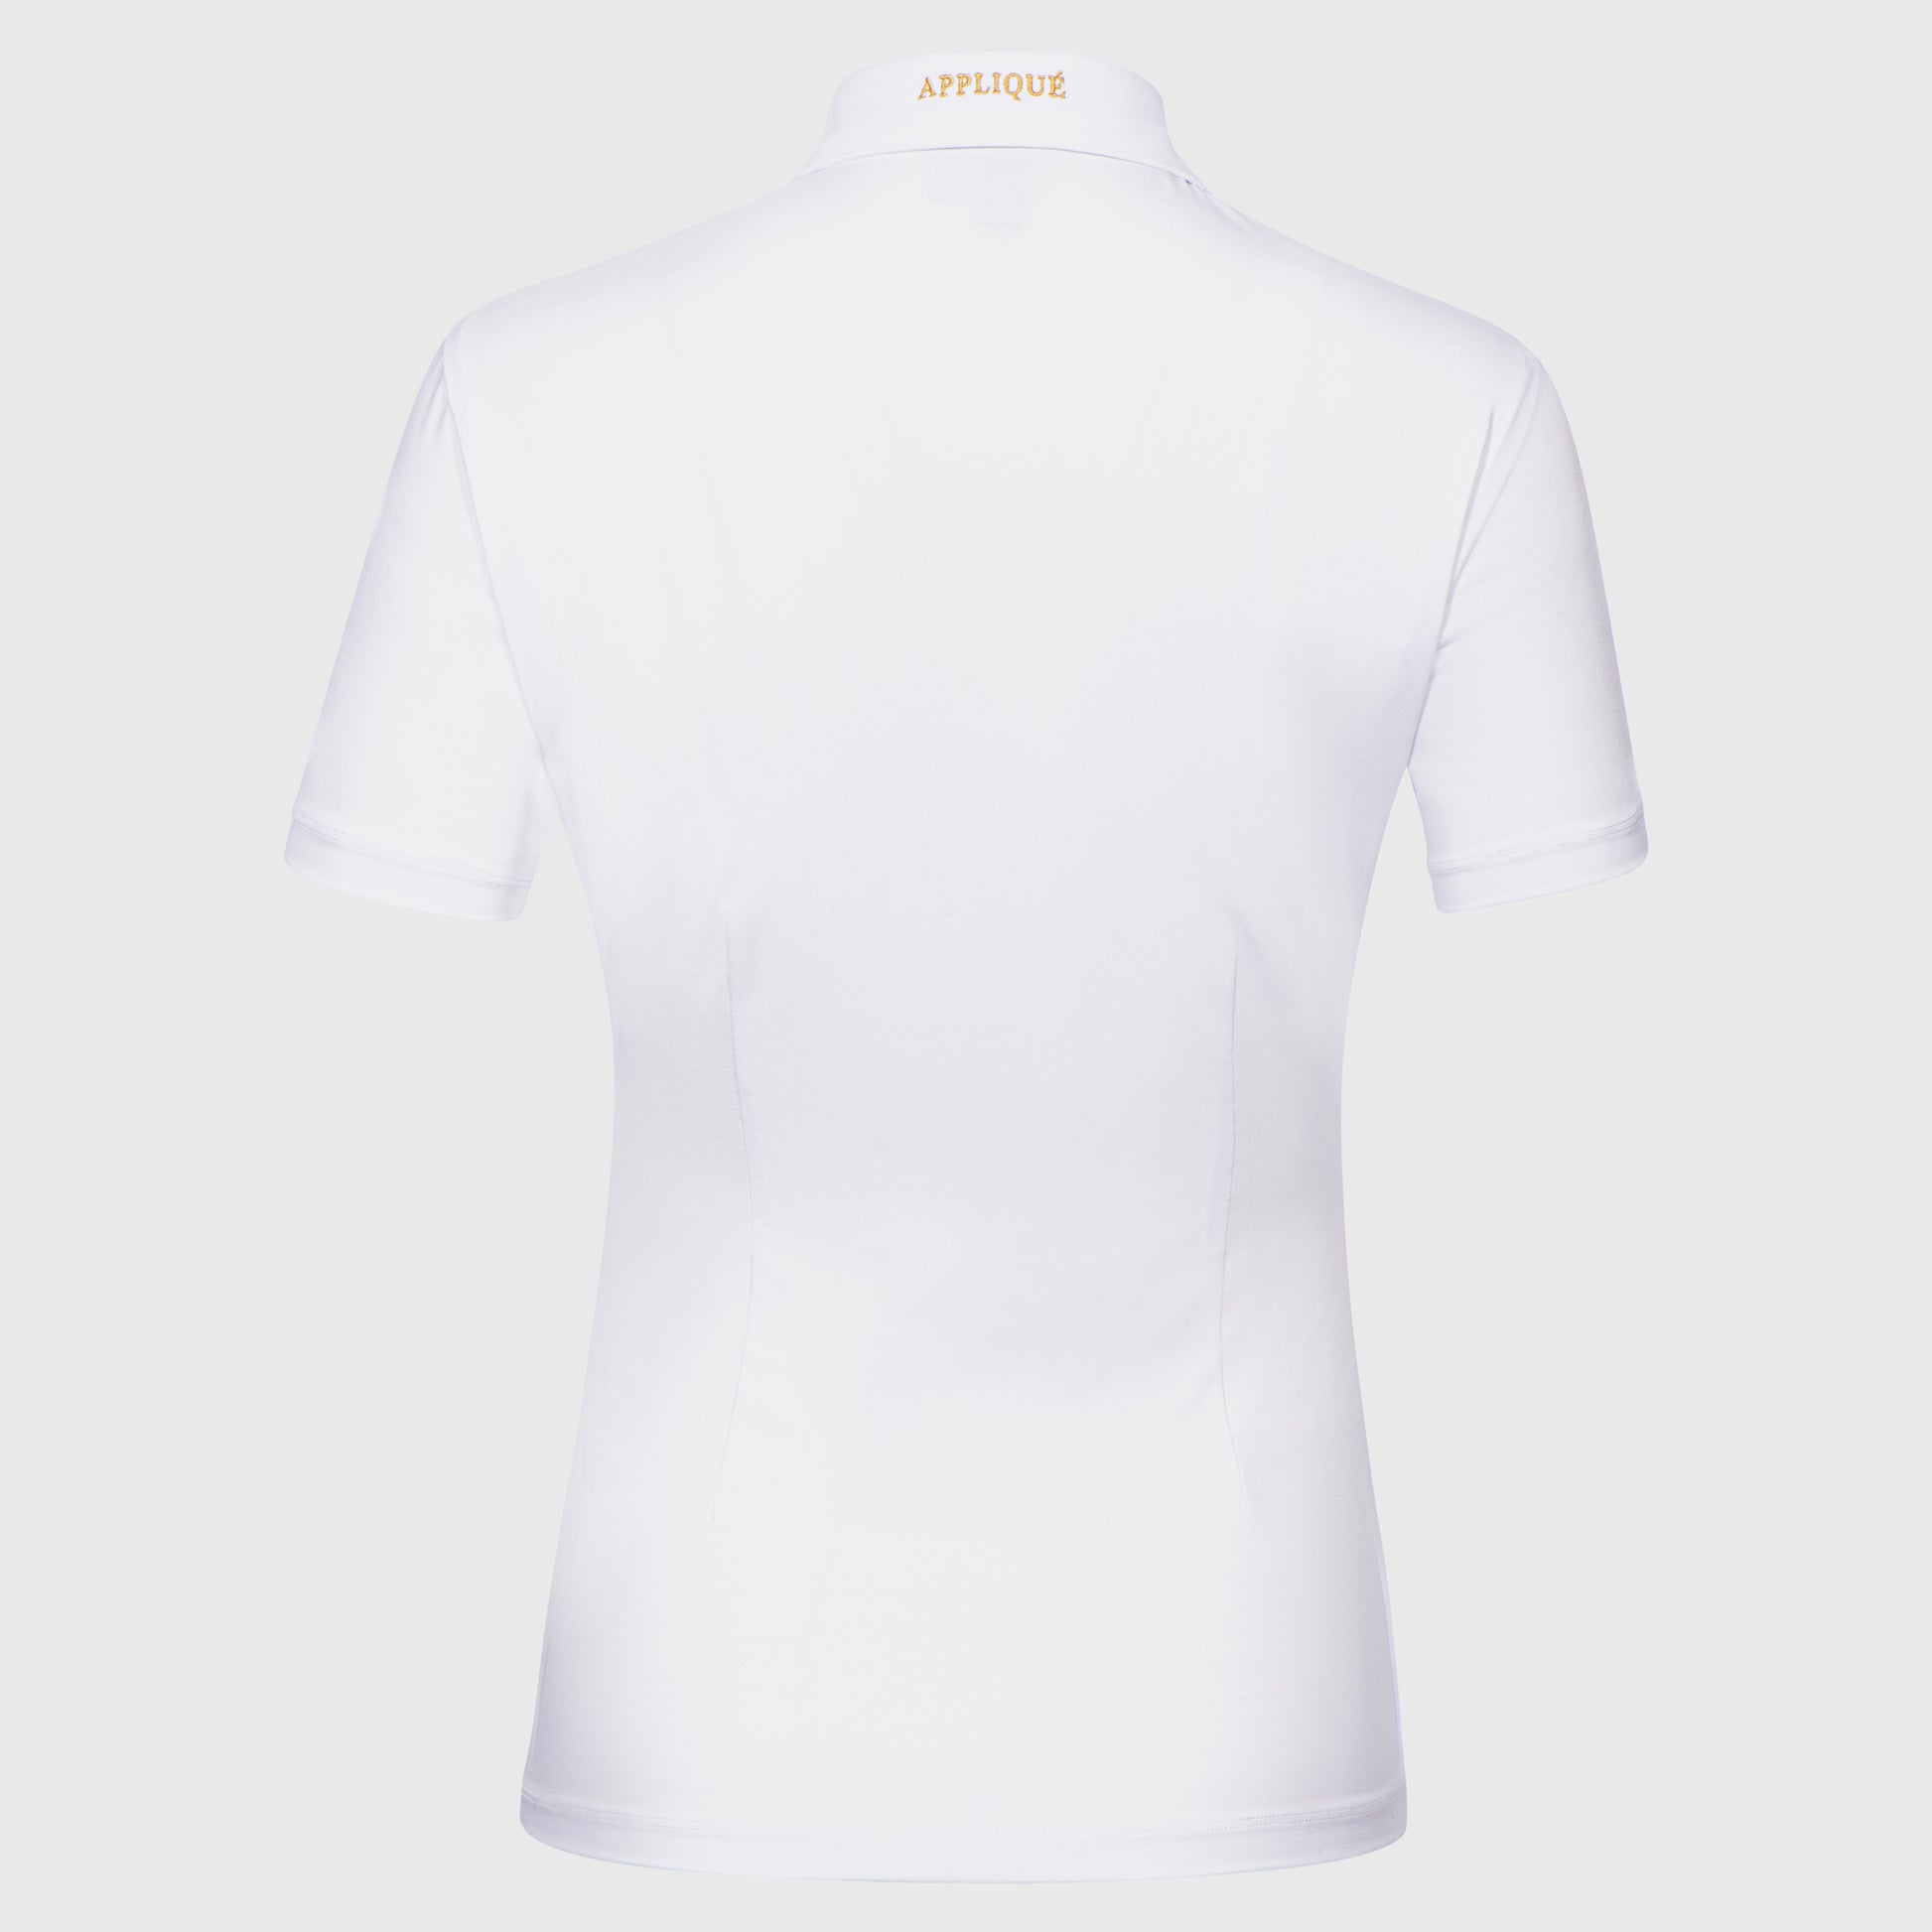 Poloshirt-White-women-training-Front-Applique-Amsterdam-Glden-Logo-Chic-Damen-T-shirt